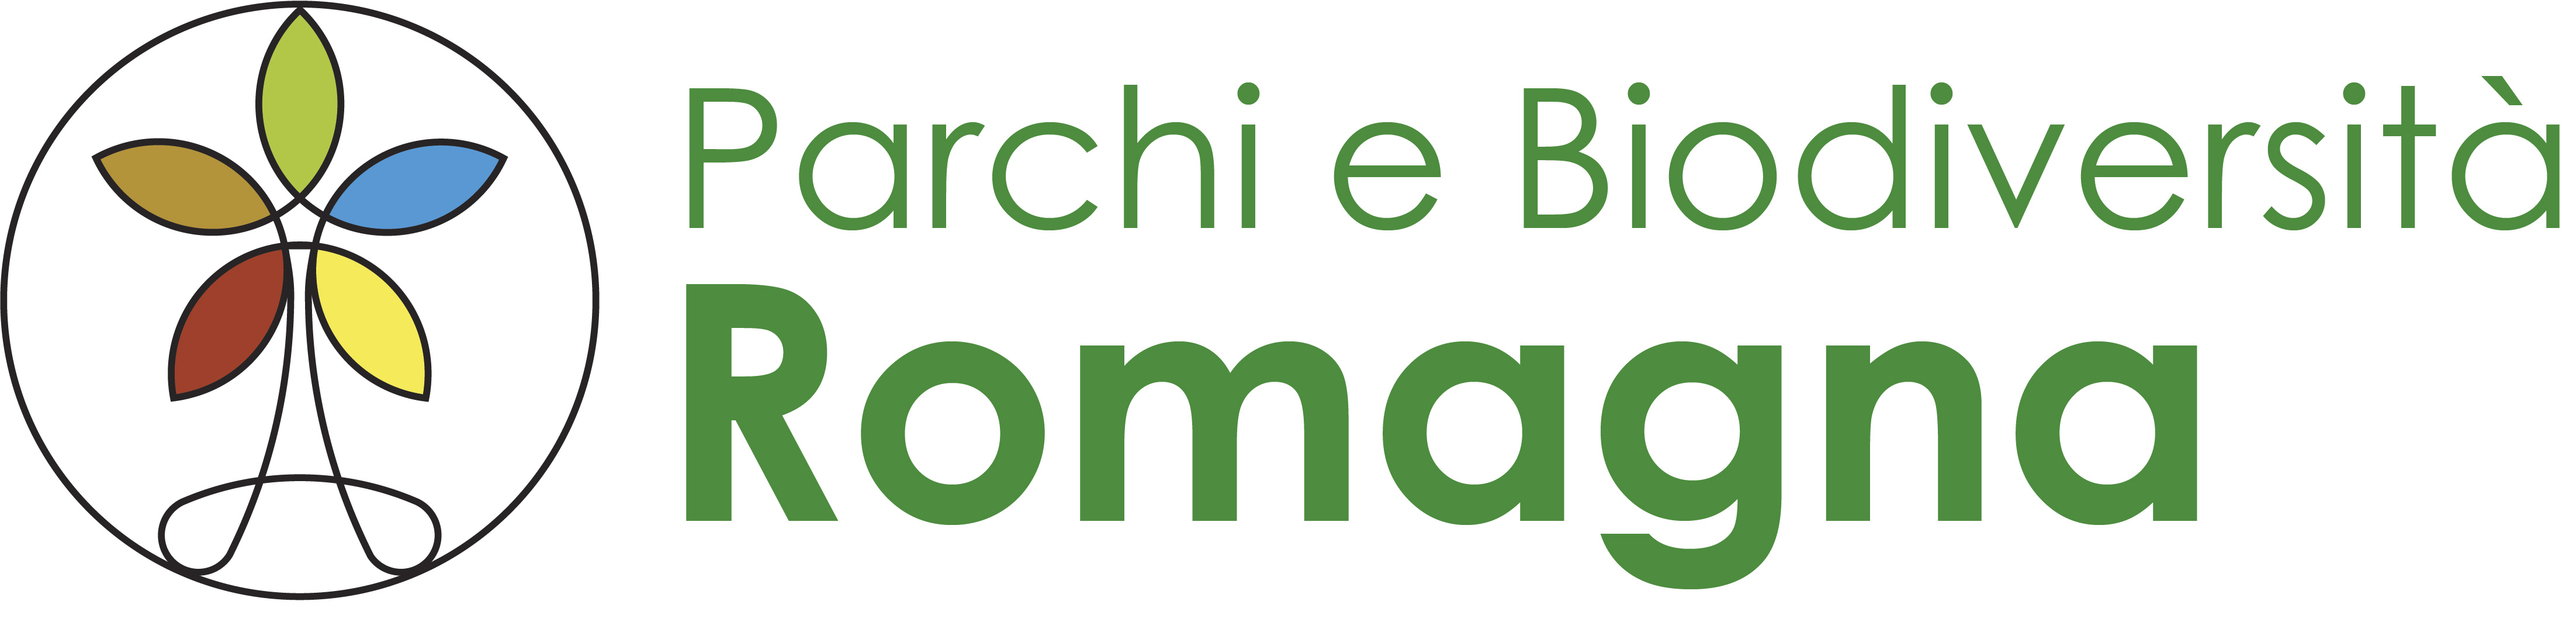 logo_parchiebiodiv_Romagna.jpg